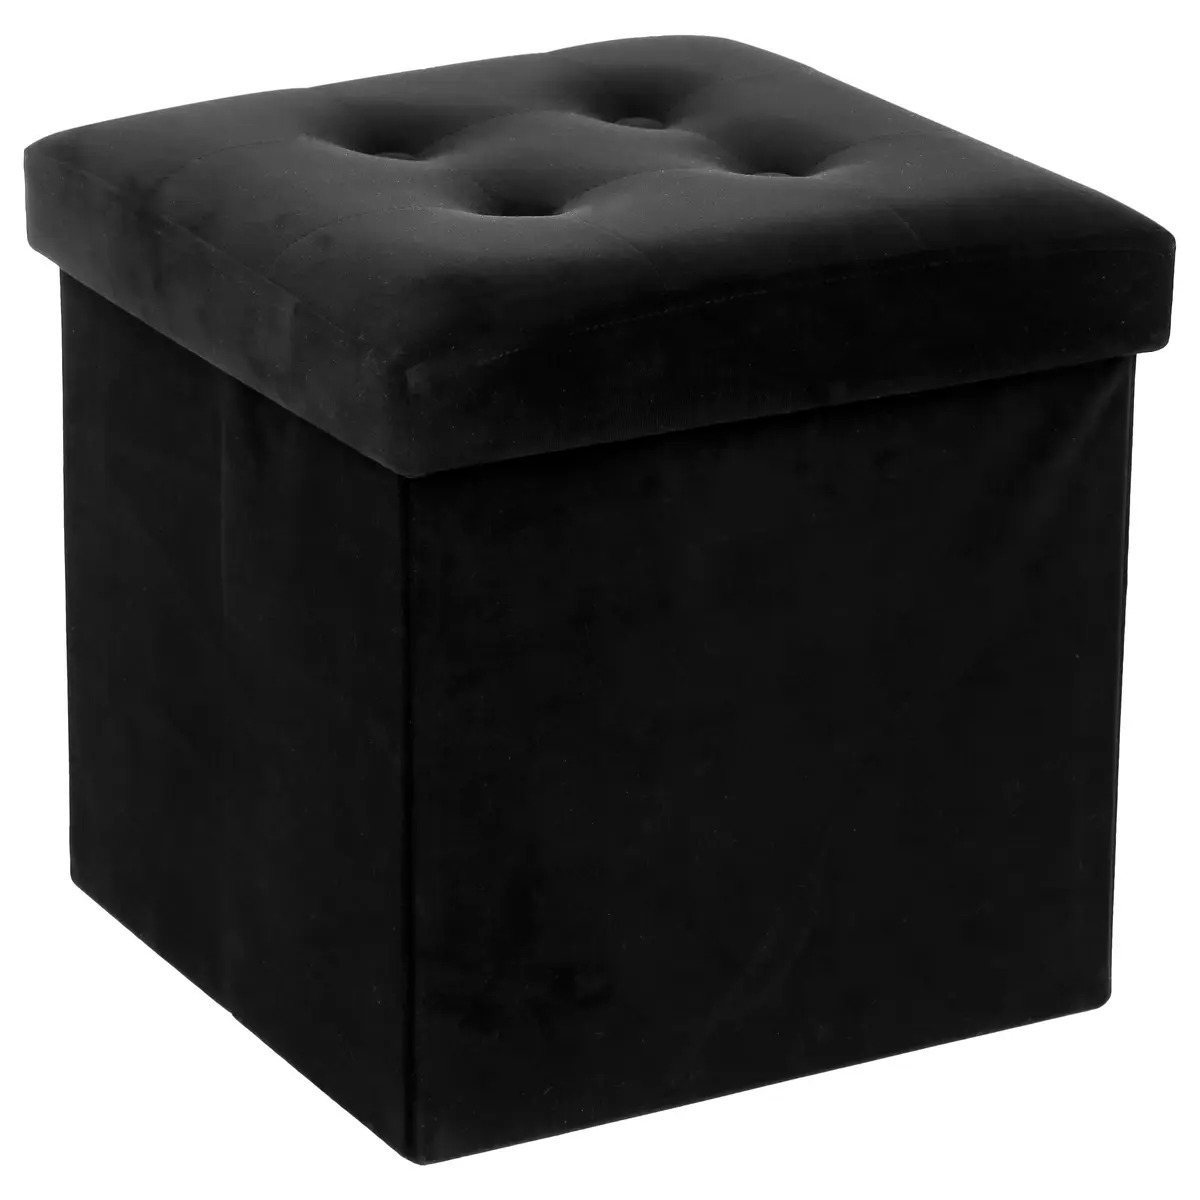 Poef-hocker opbergbox zwart kunststof-mdf 38 x 38 cm opvouwbaar